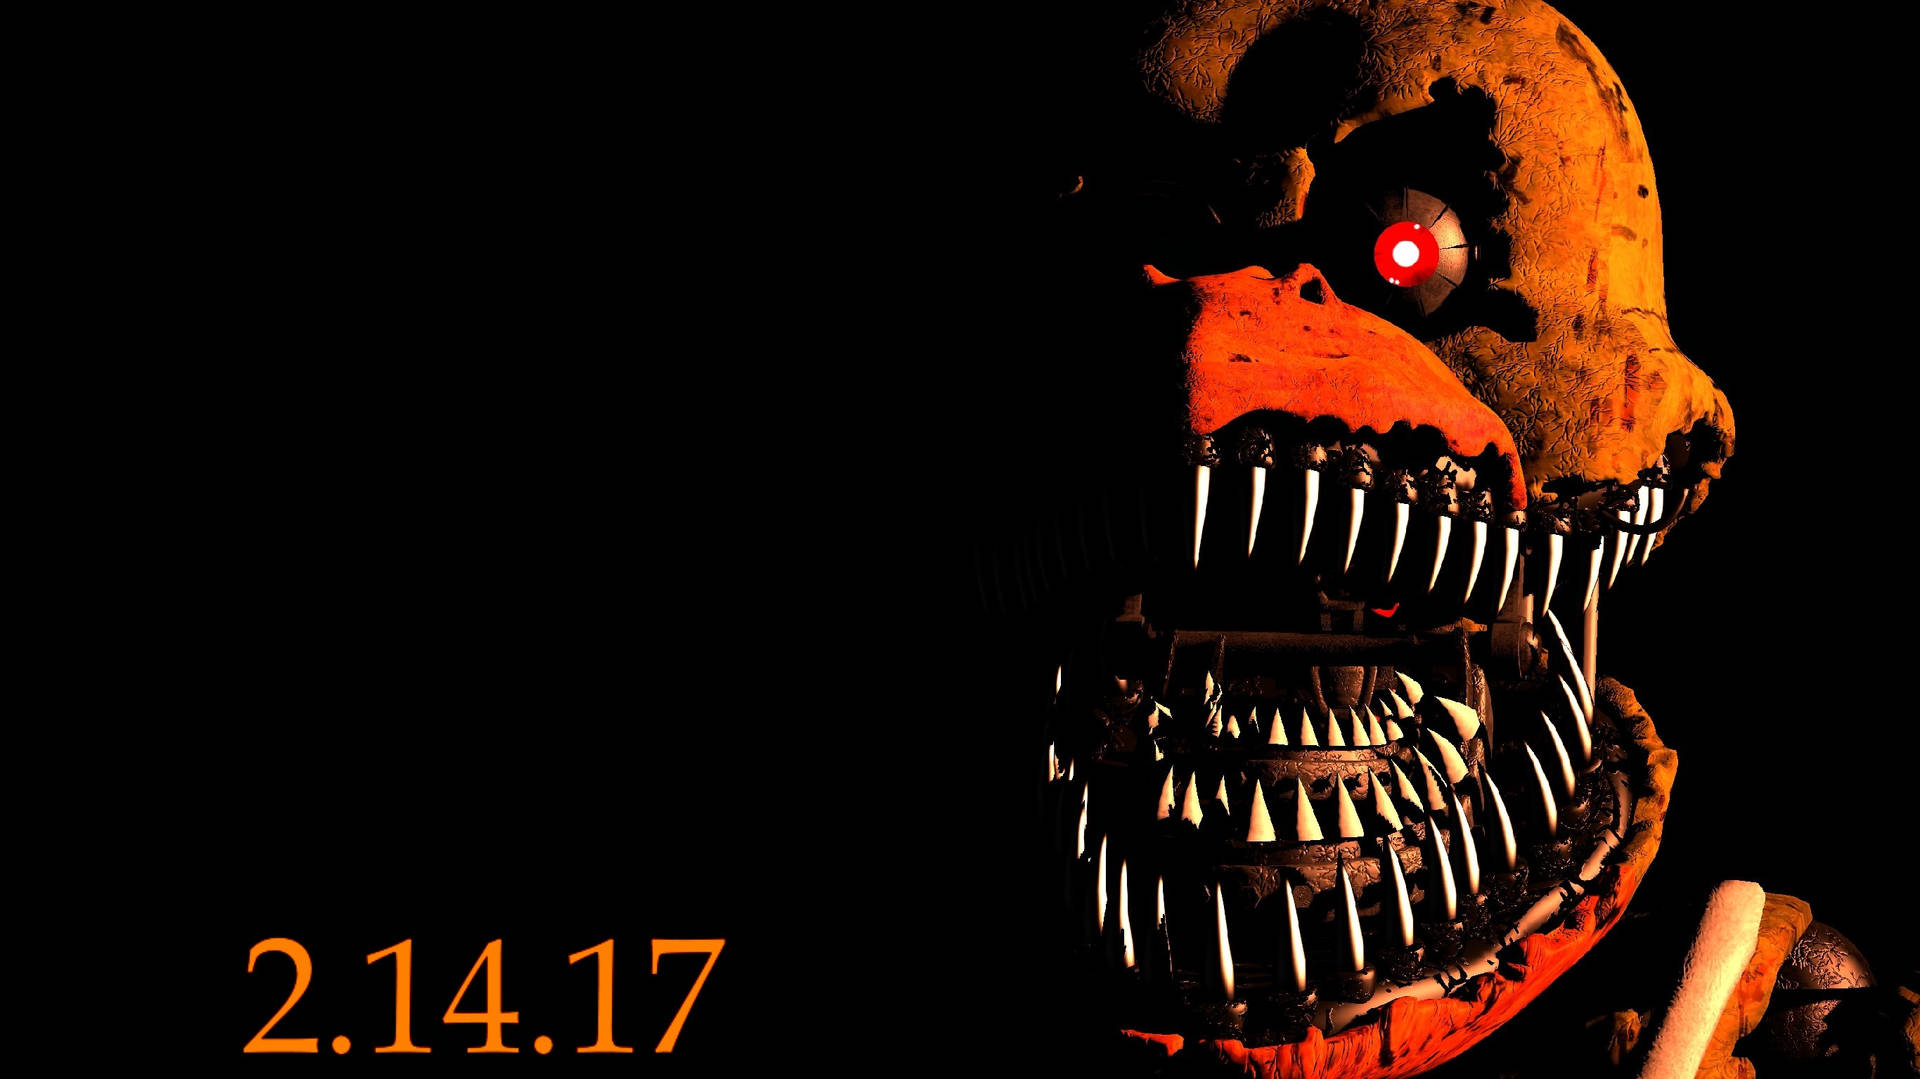 Nightmare Freddy Chica Poster Wallpaper